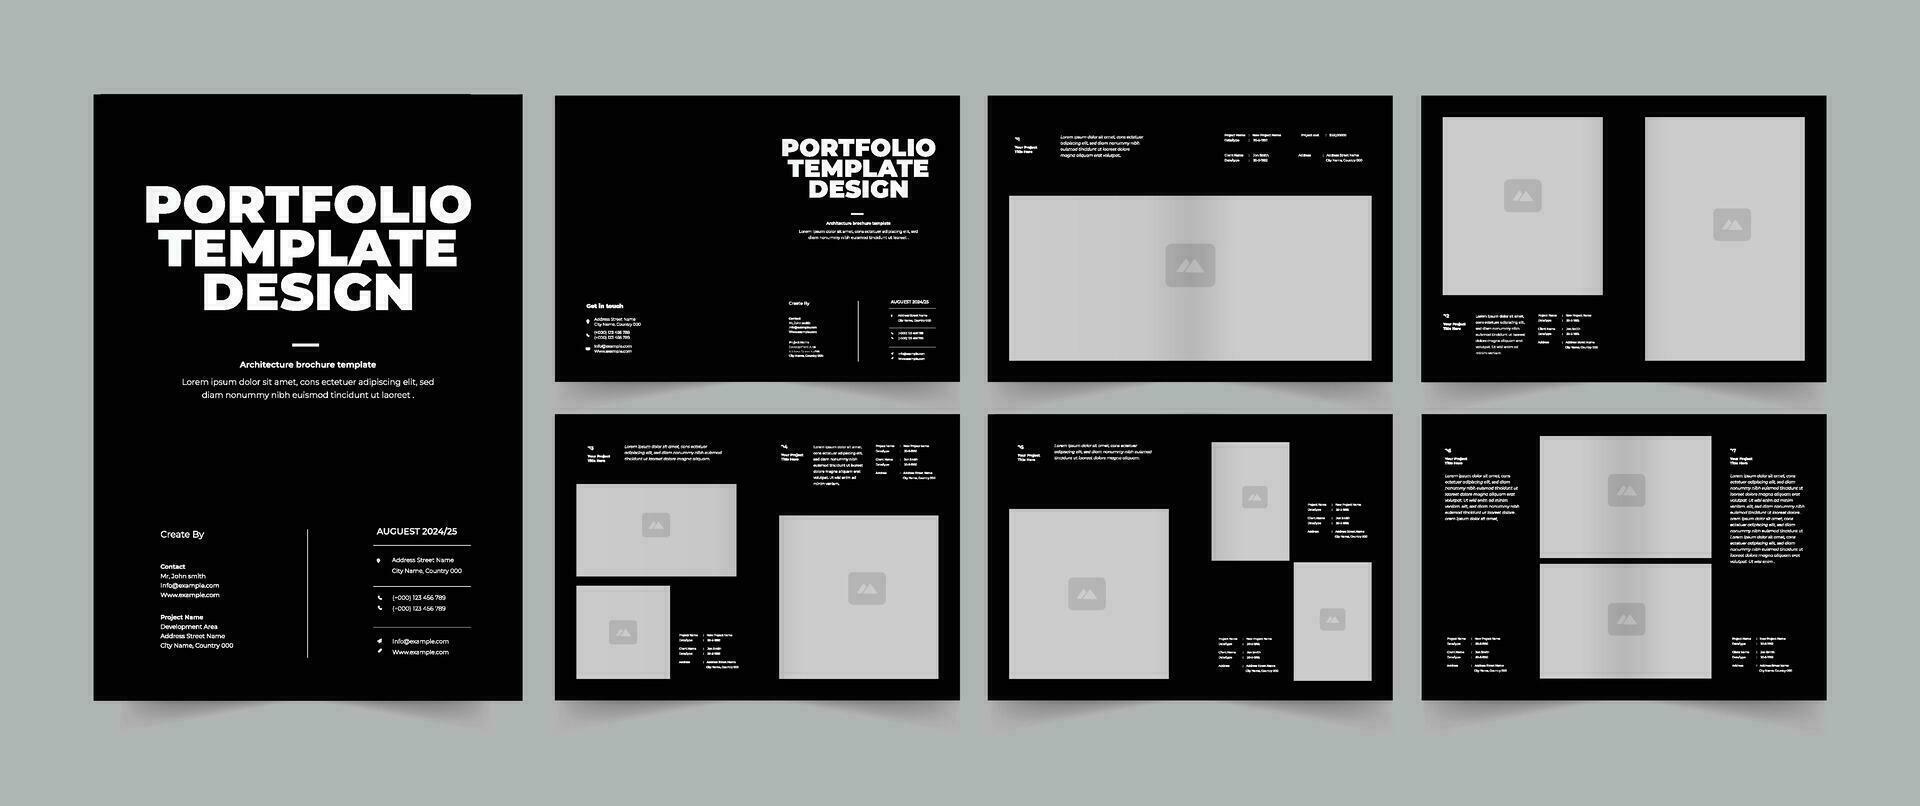 portfolio template and architecture portfolio layout design vector